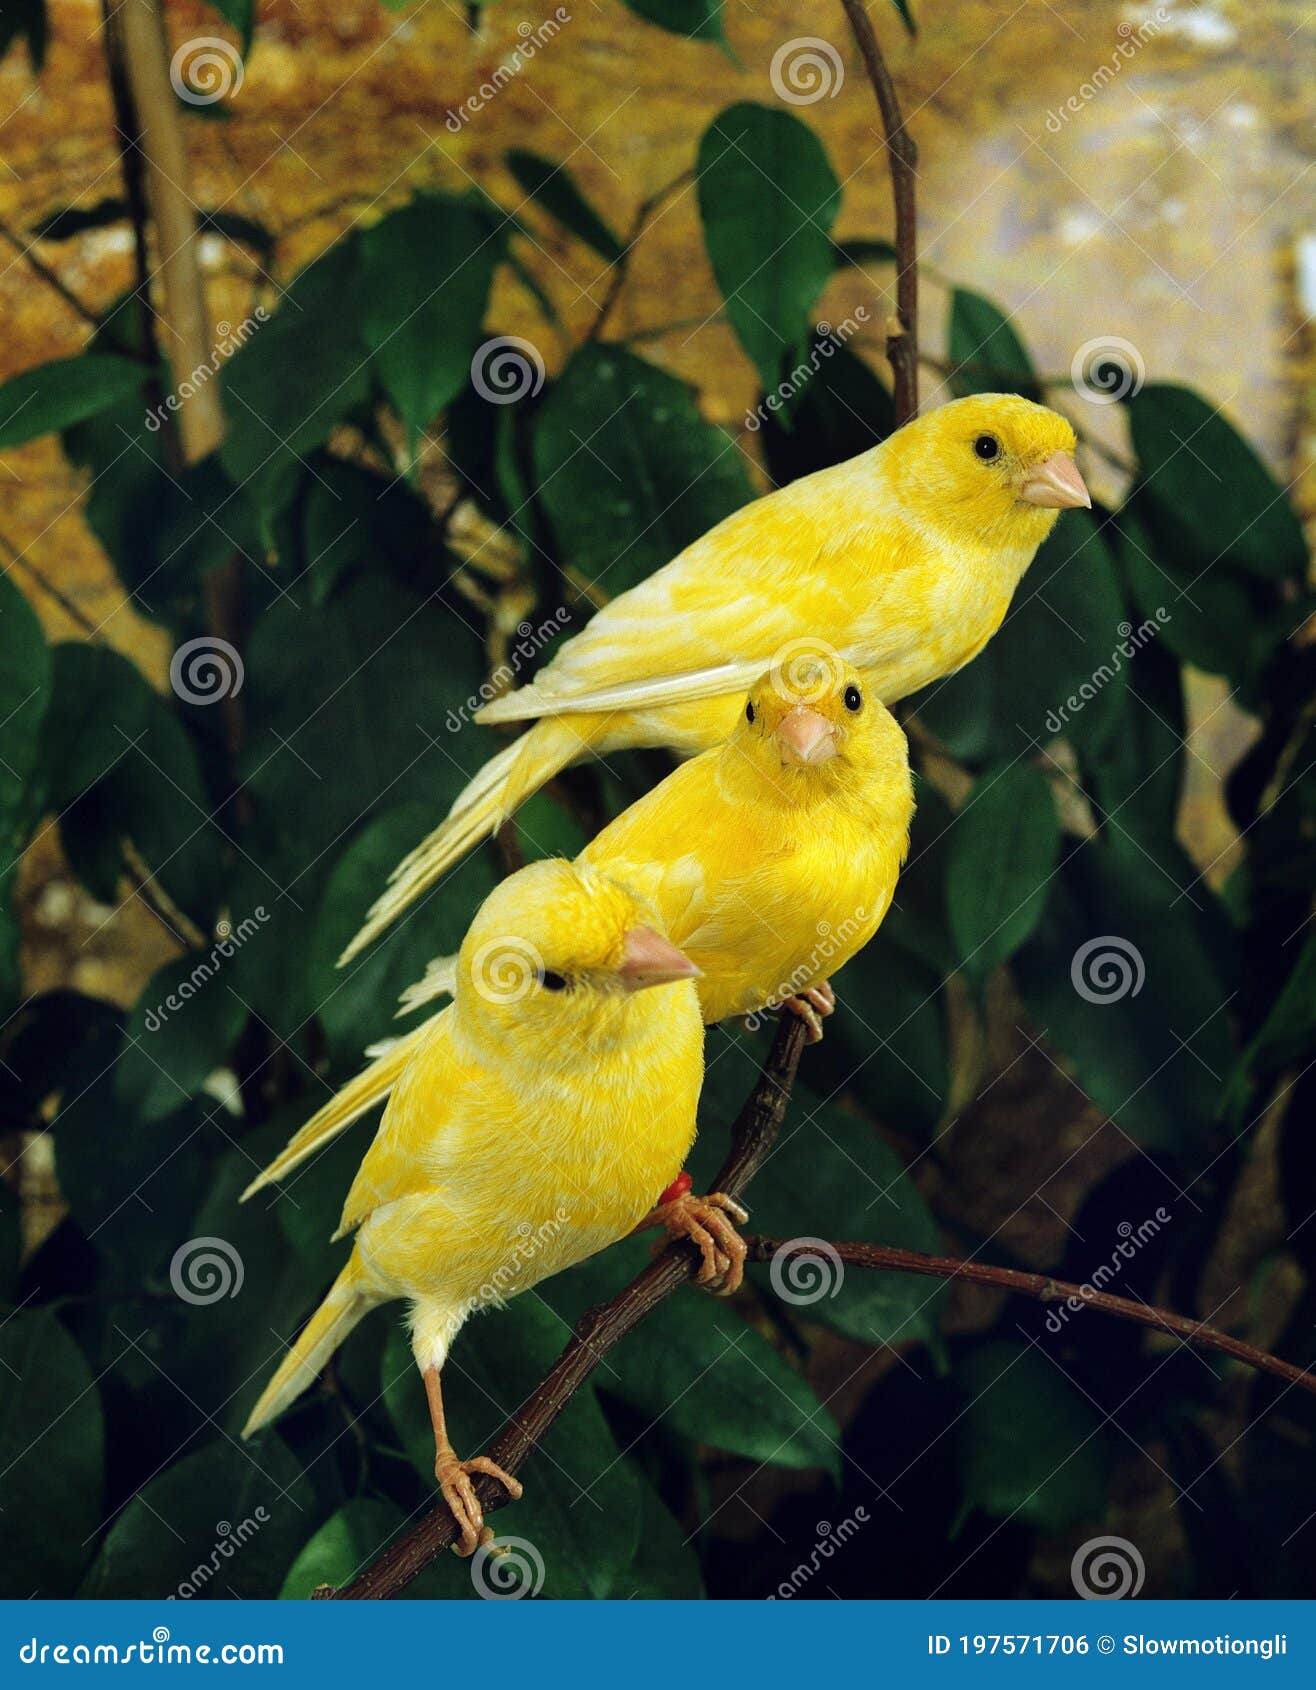 yellow canaries, serinus canaria